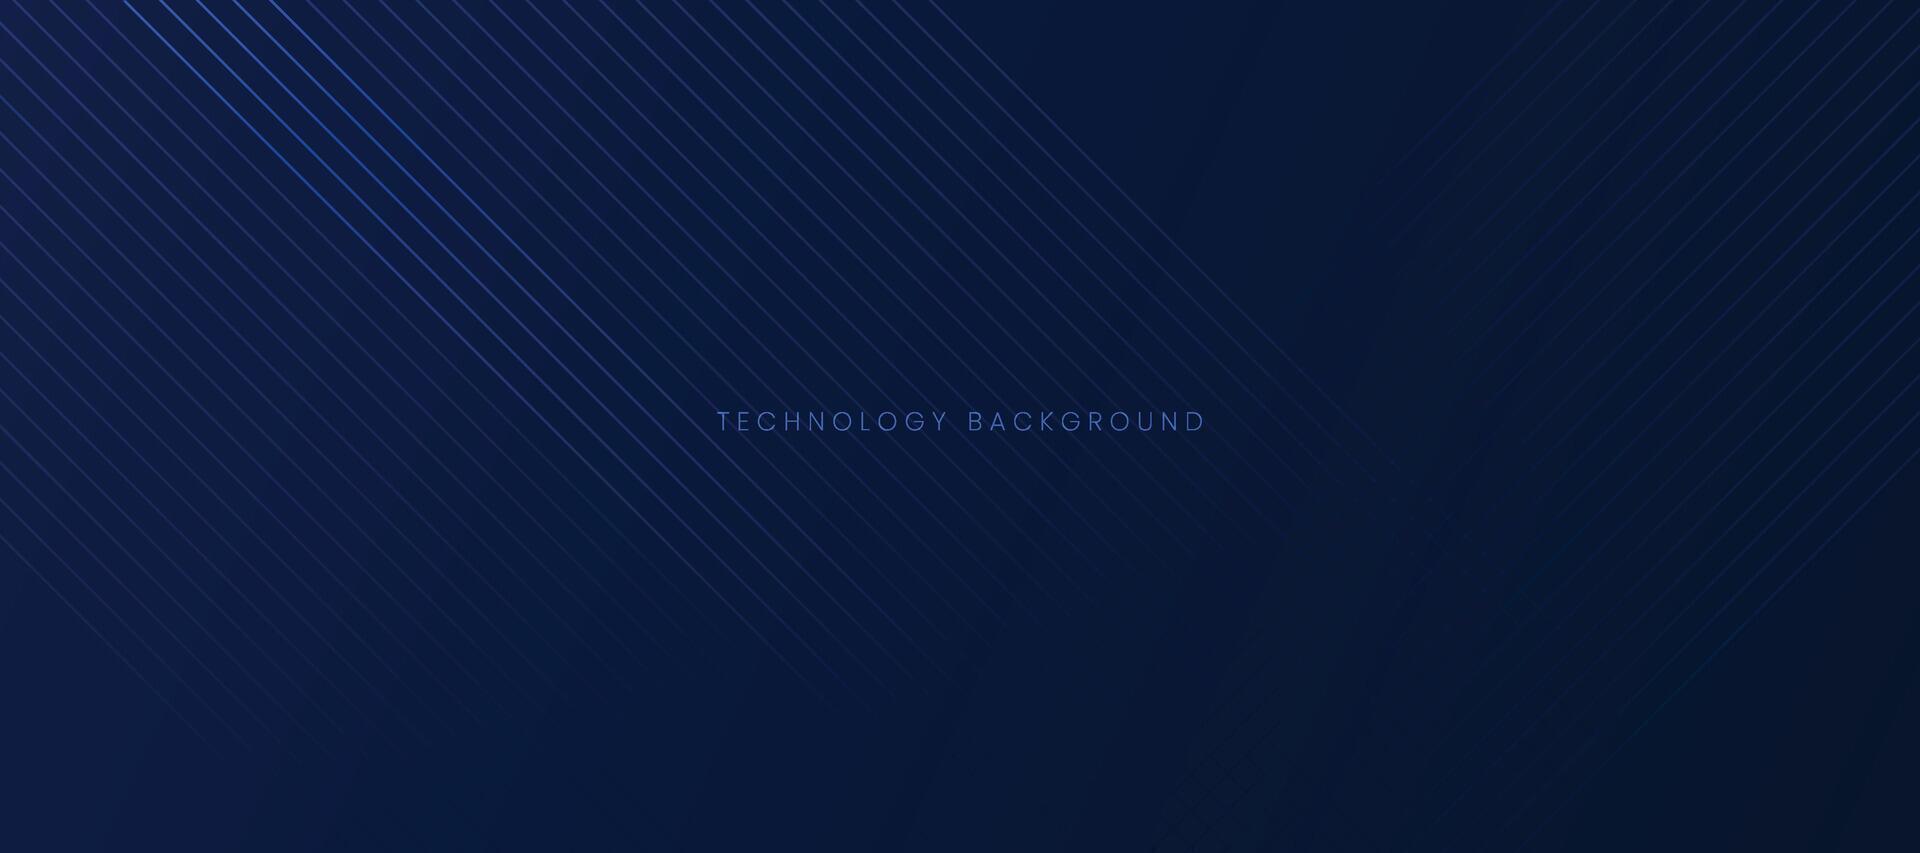 Dark blue modern technology background with linear design. vector